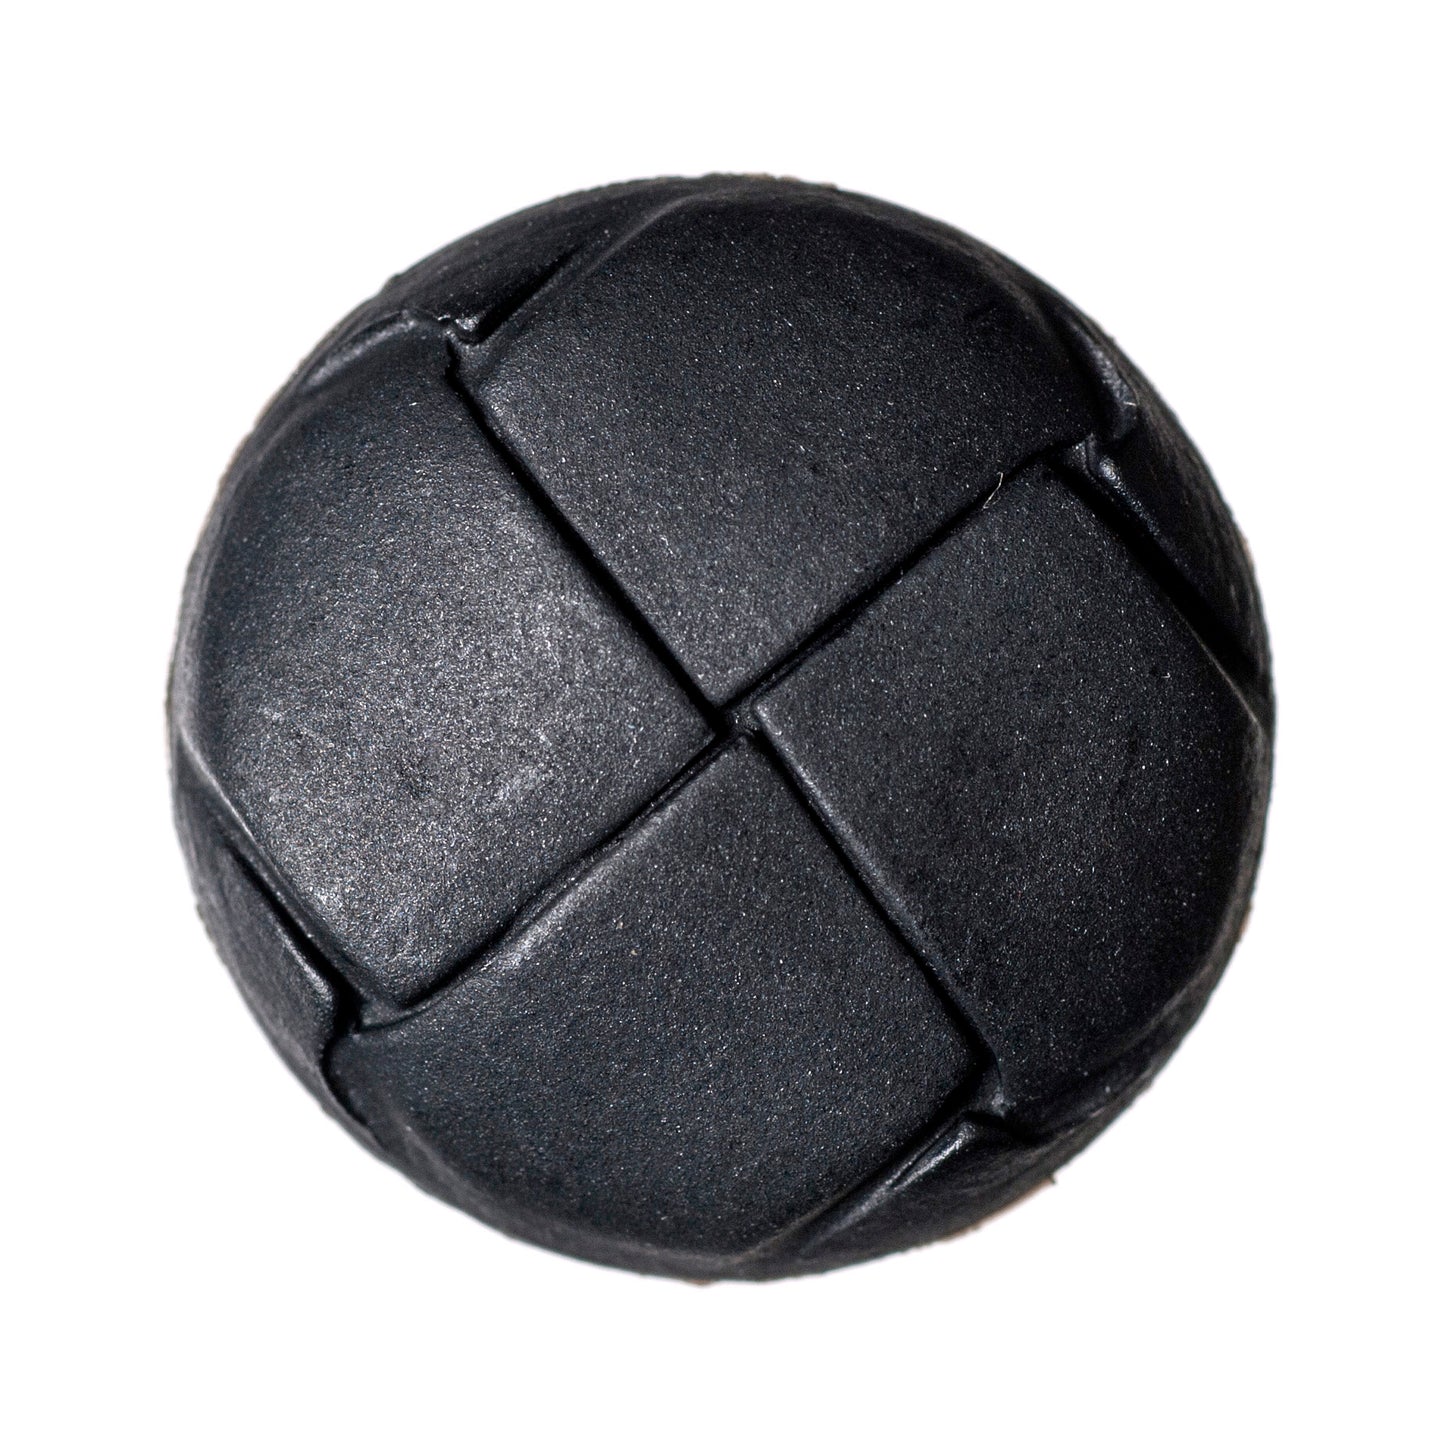 Imitation Leather Shank Button - 23mm - Black [LA2.5]